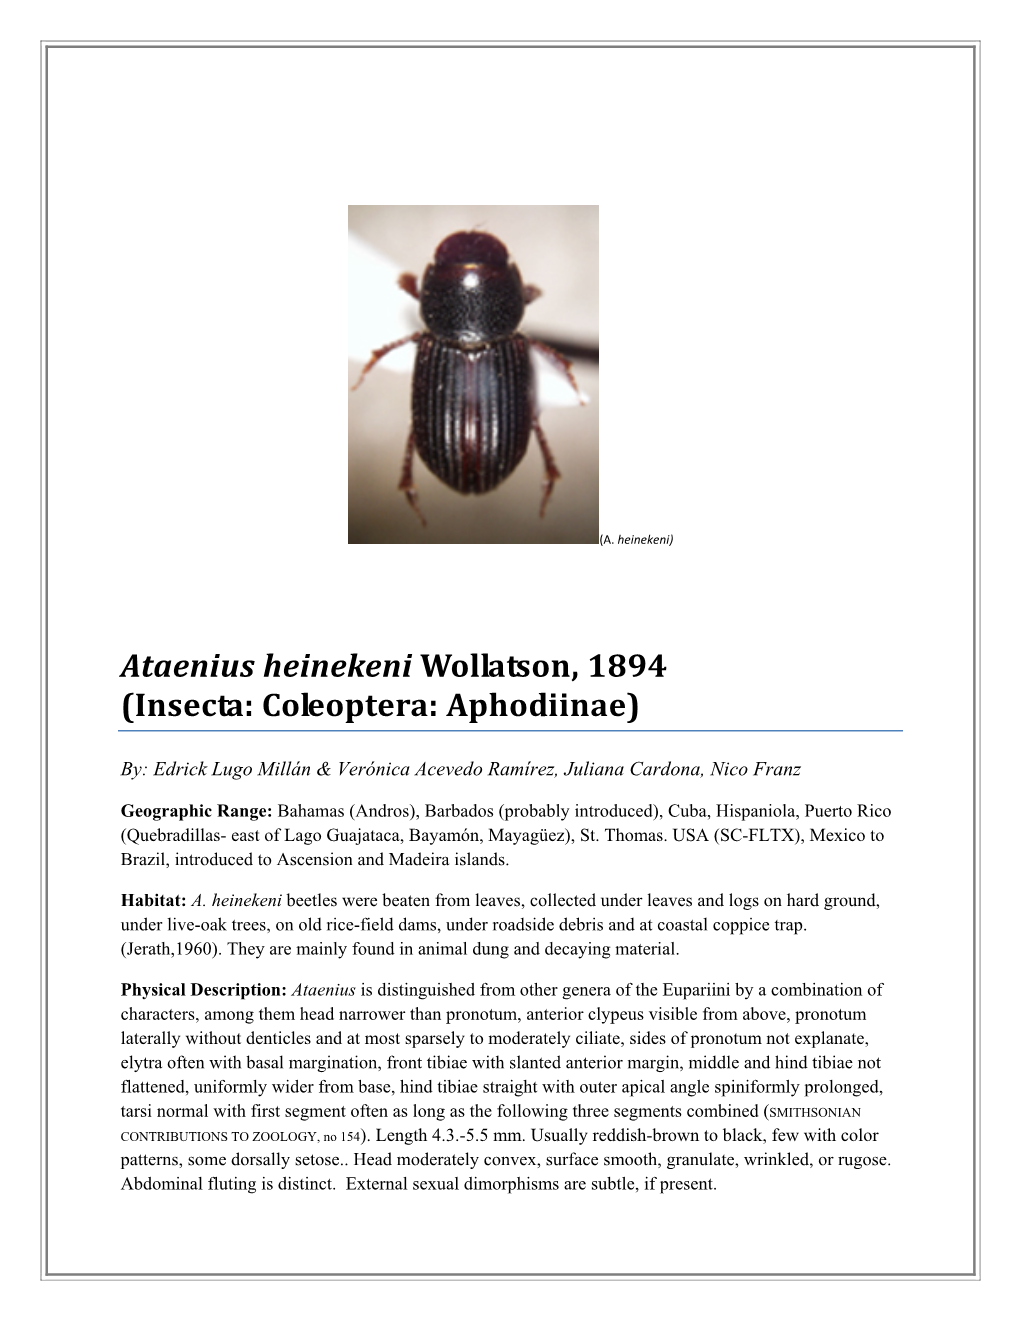 Ataenius Heinekeni Wollatson, 1894 (Insecta: Coleoptera: Aphodiinae)